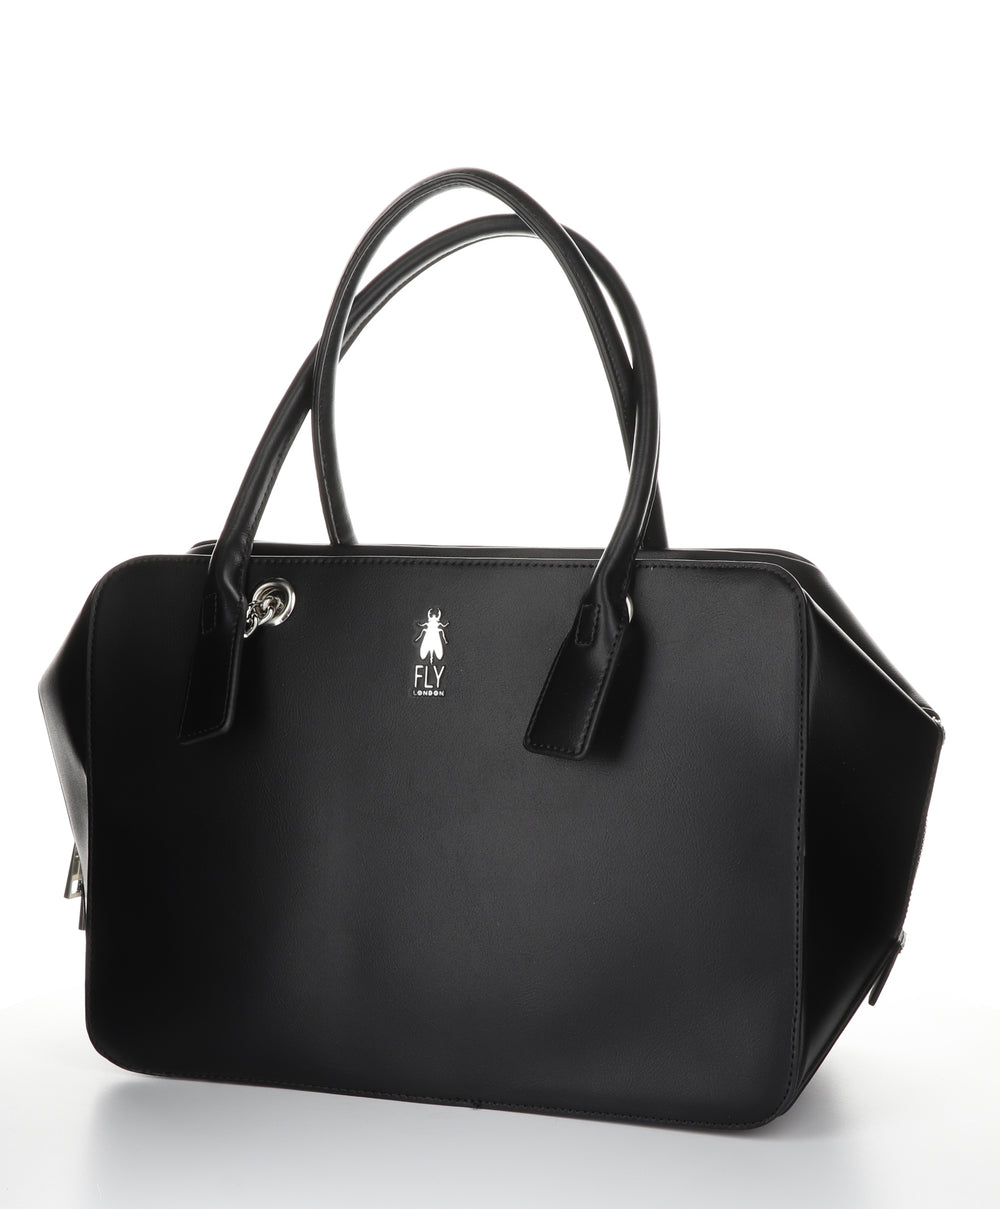 AVES698FLY BLACK Handbag Bags|AVES698FLY Sac à Main in Noir